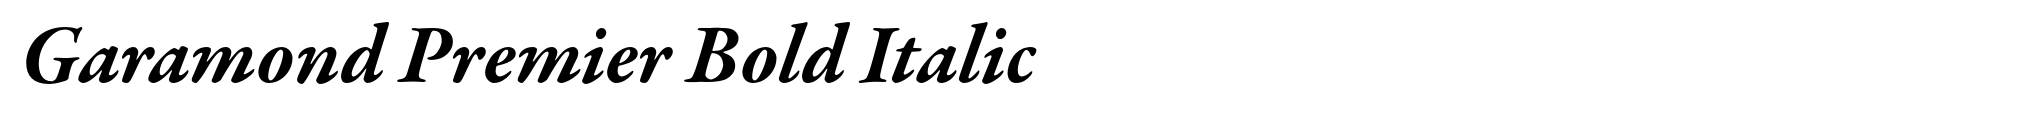 Garamond Premier Bold Italic image